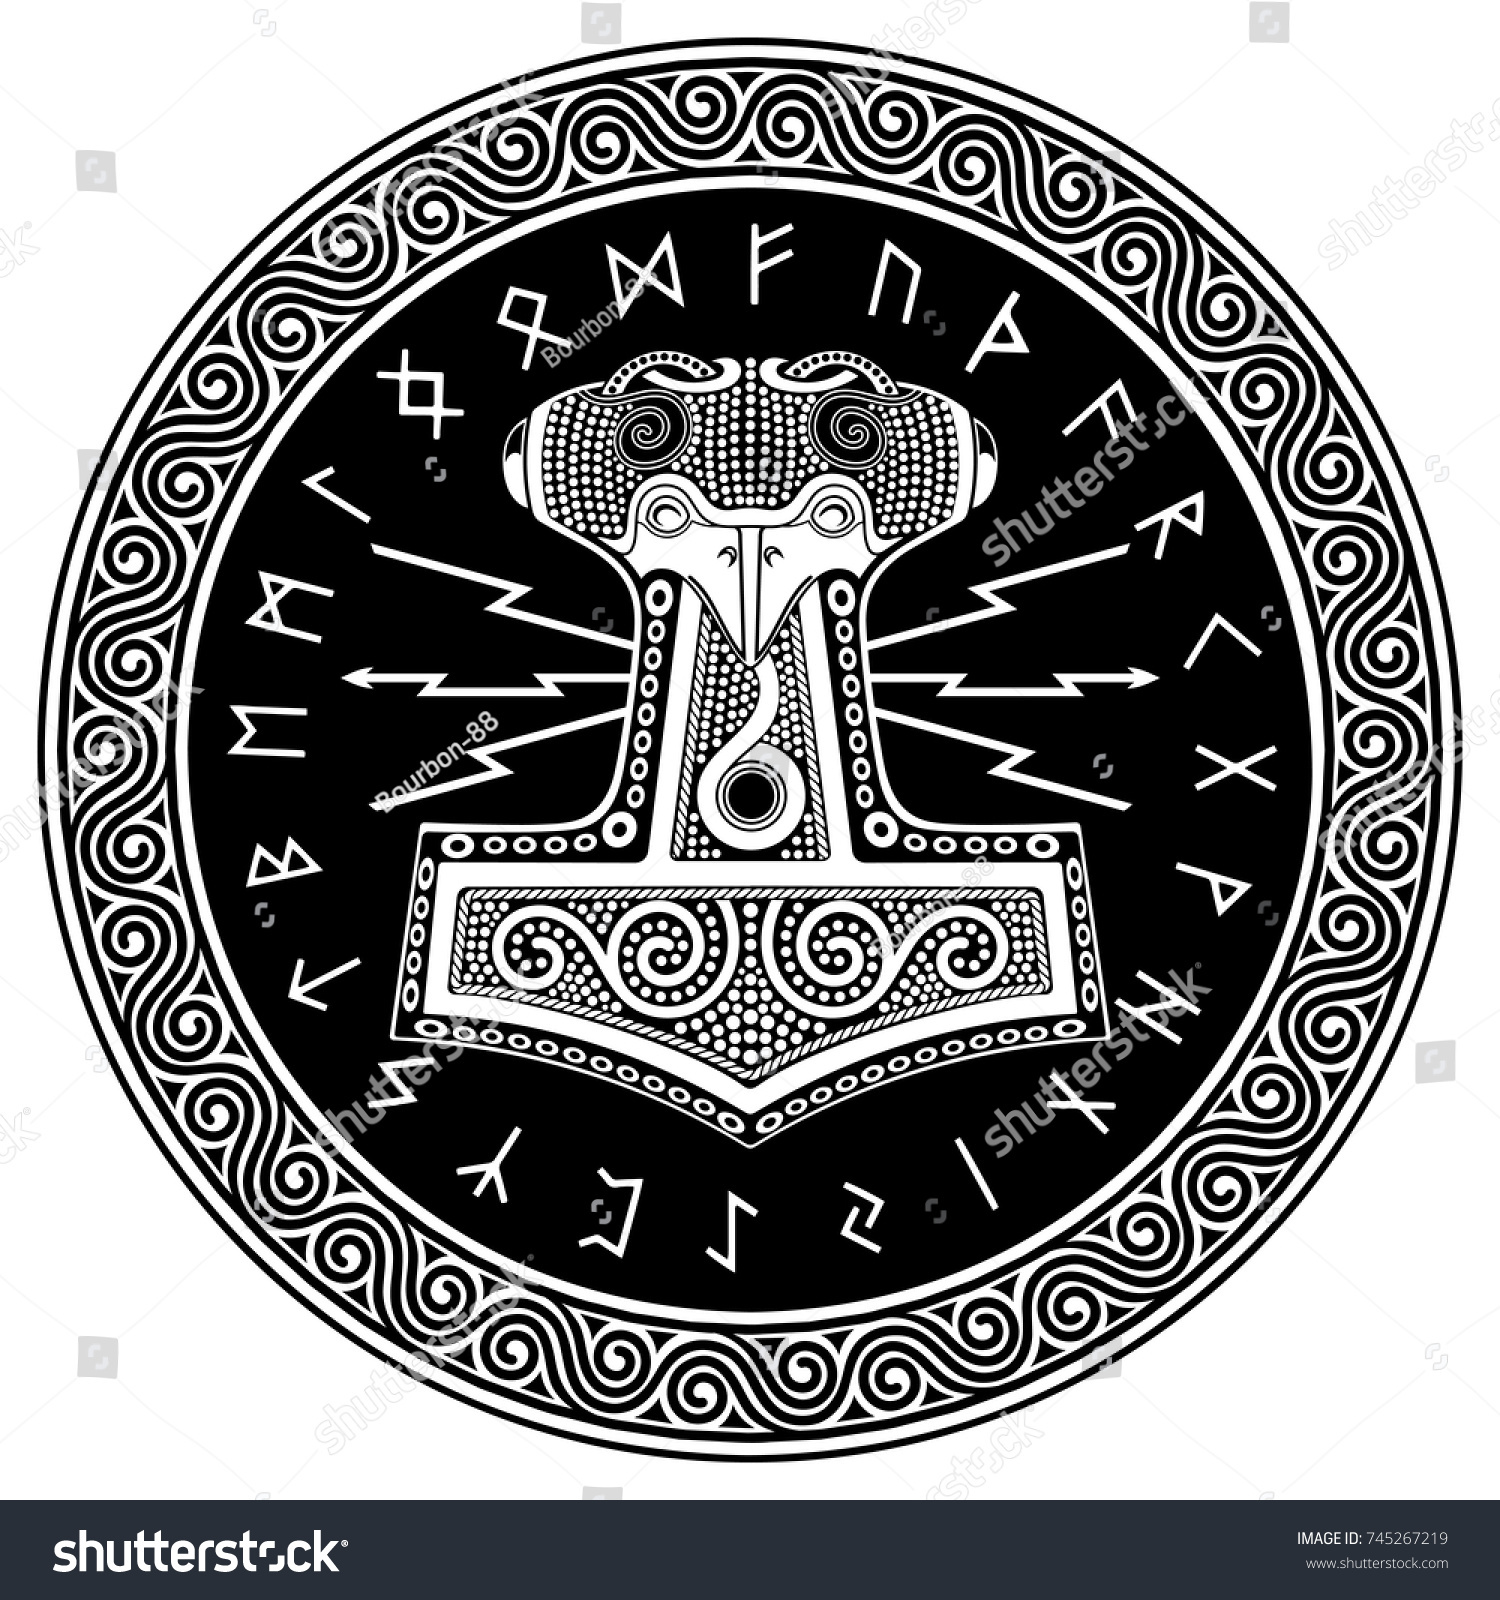 SVG of Thor's hammer - Mjollnir and the Scandinavian ornament, isolated on white, vector illustration svg